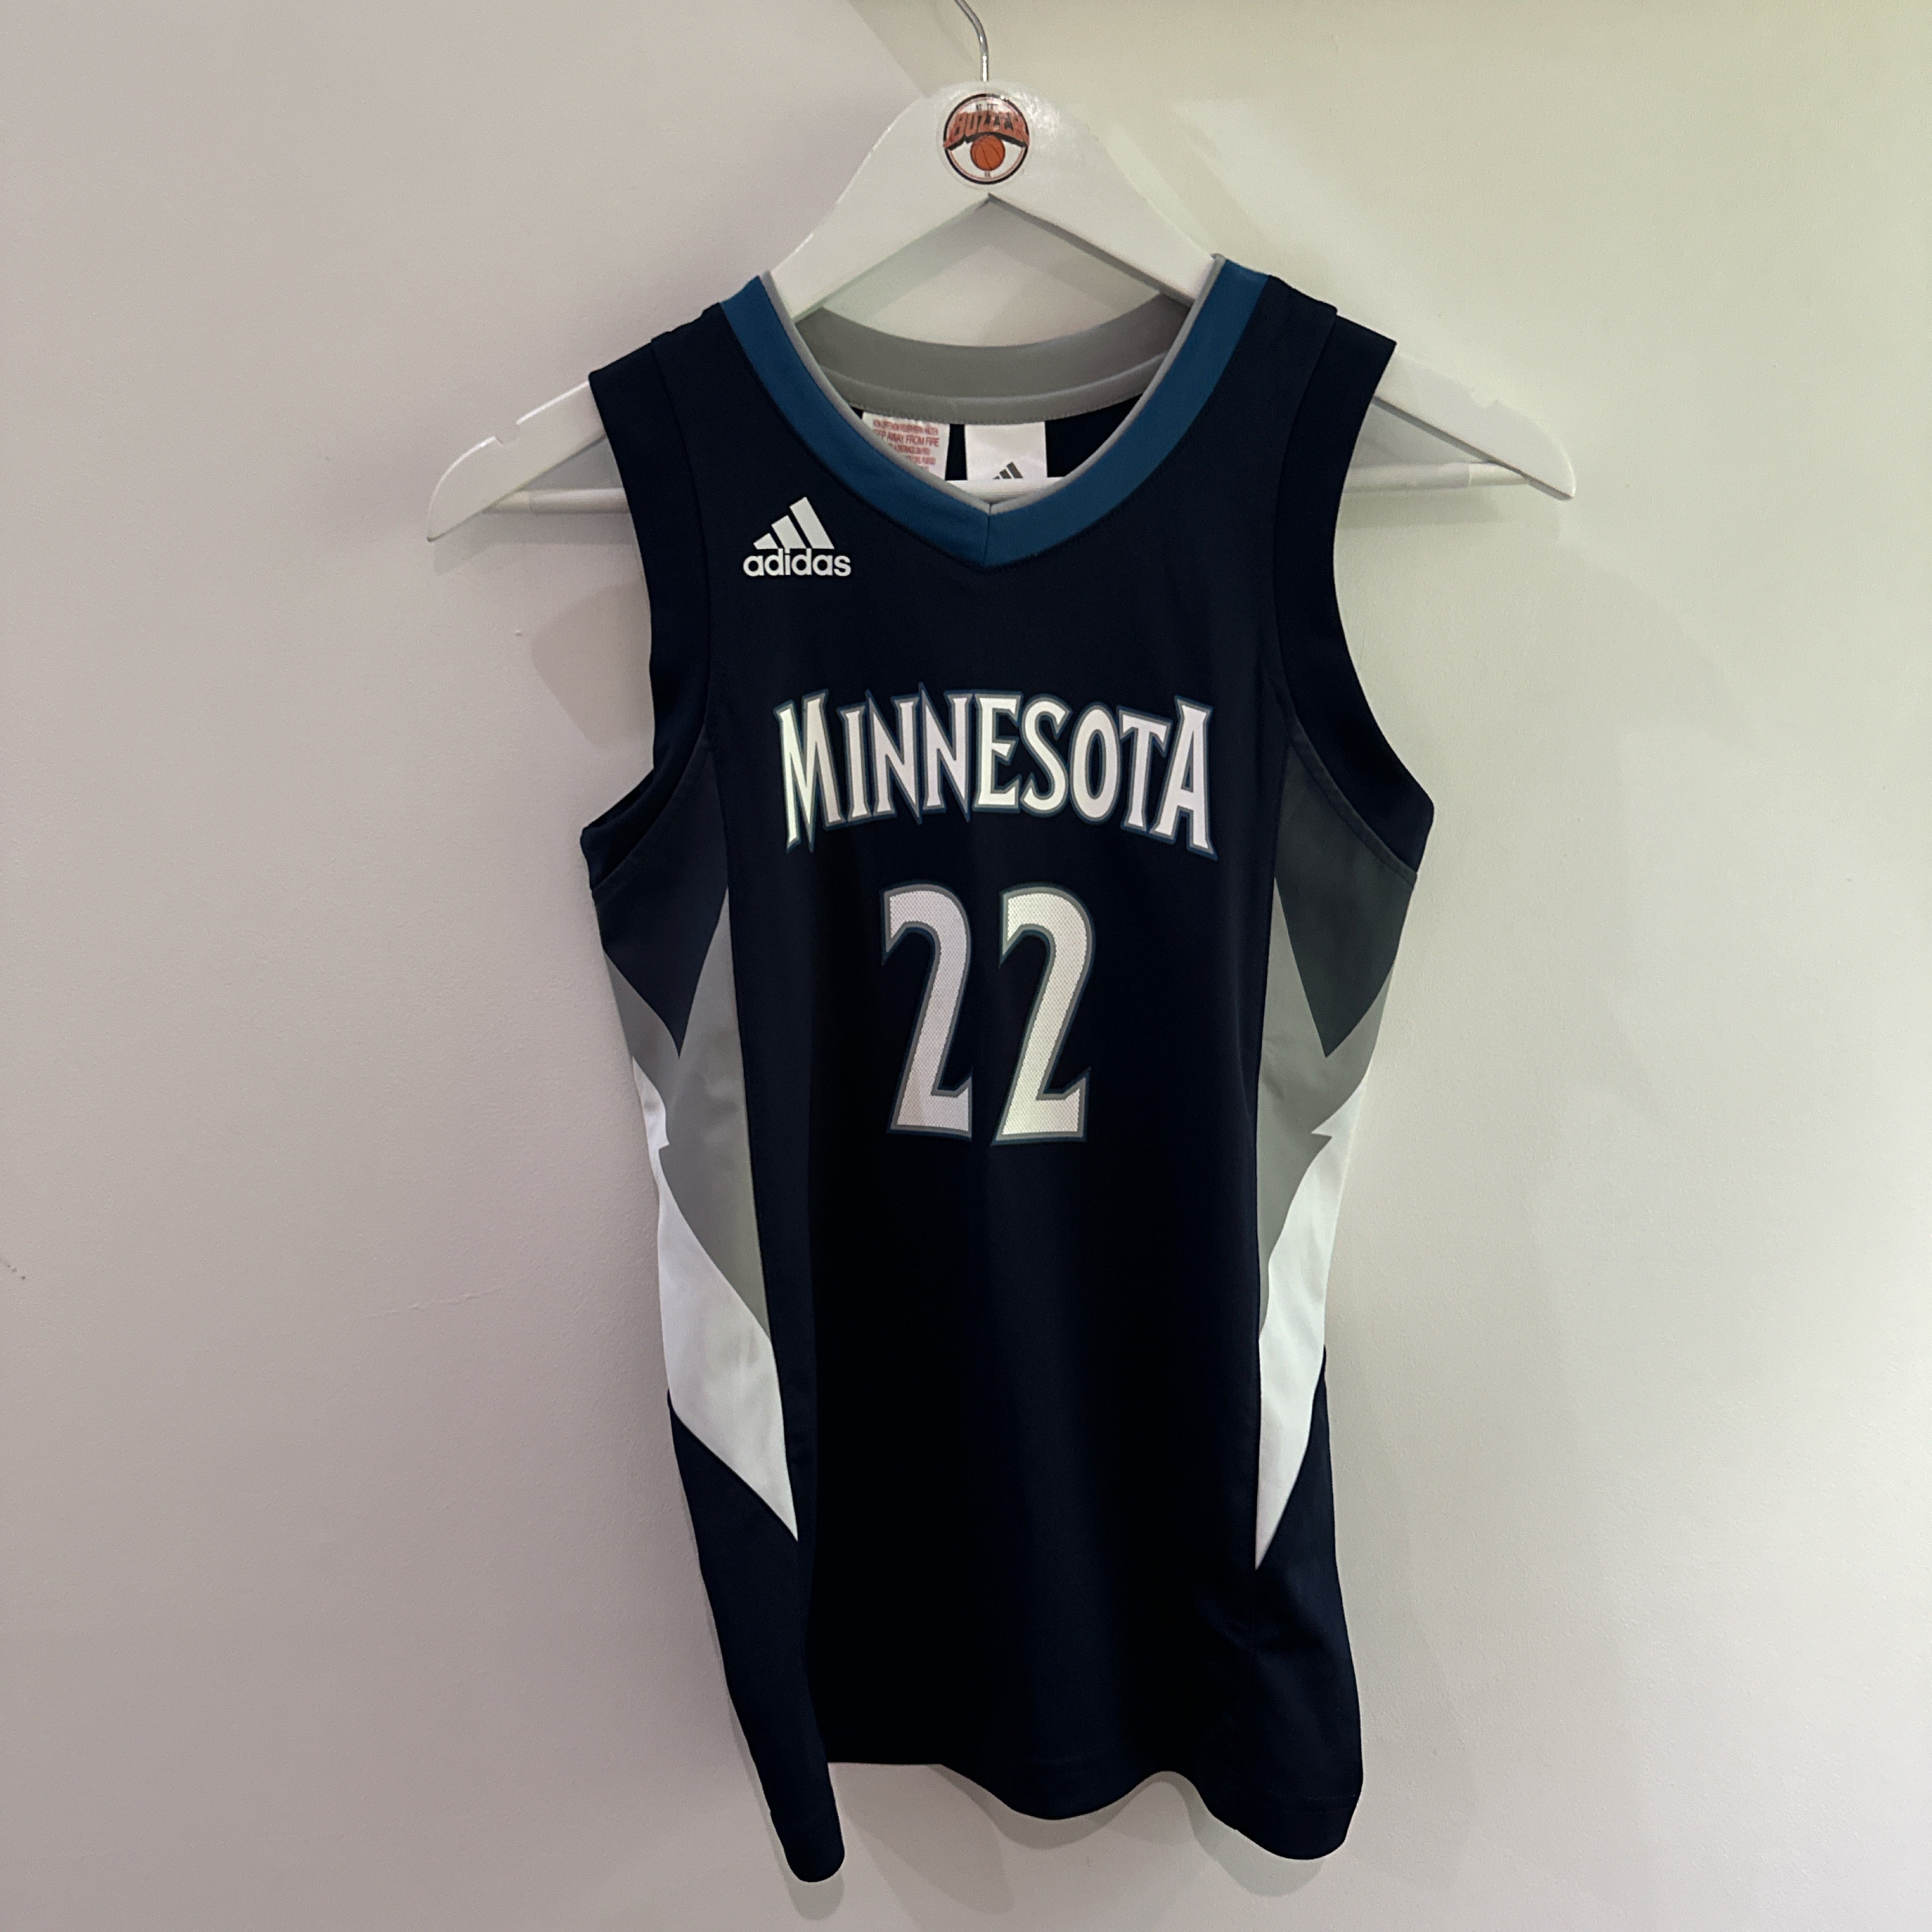 Minnesota Timberwolves Andrew Wiggins jersey & shorts - Youth Small